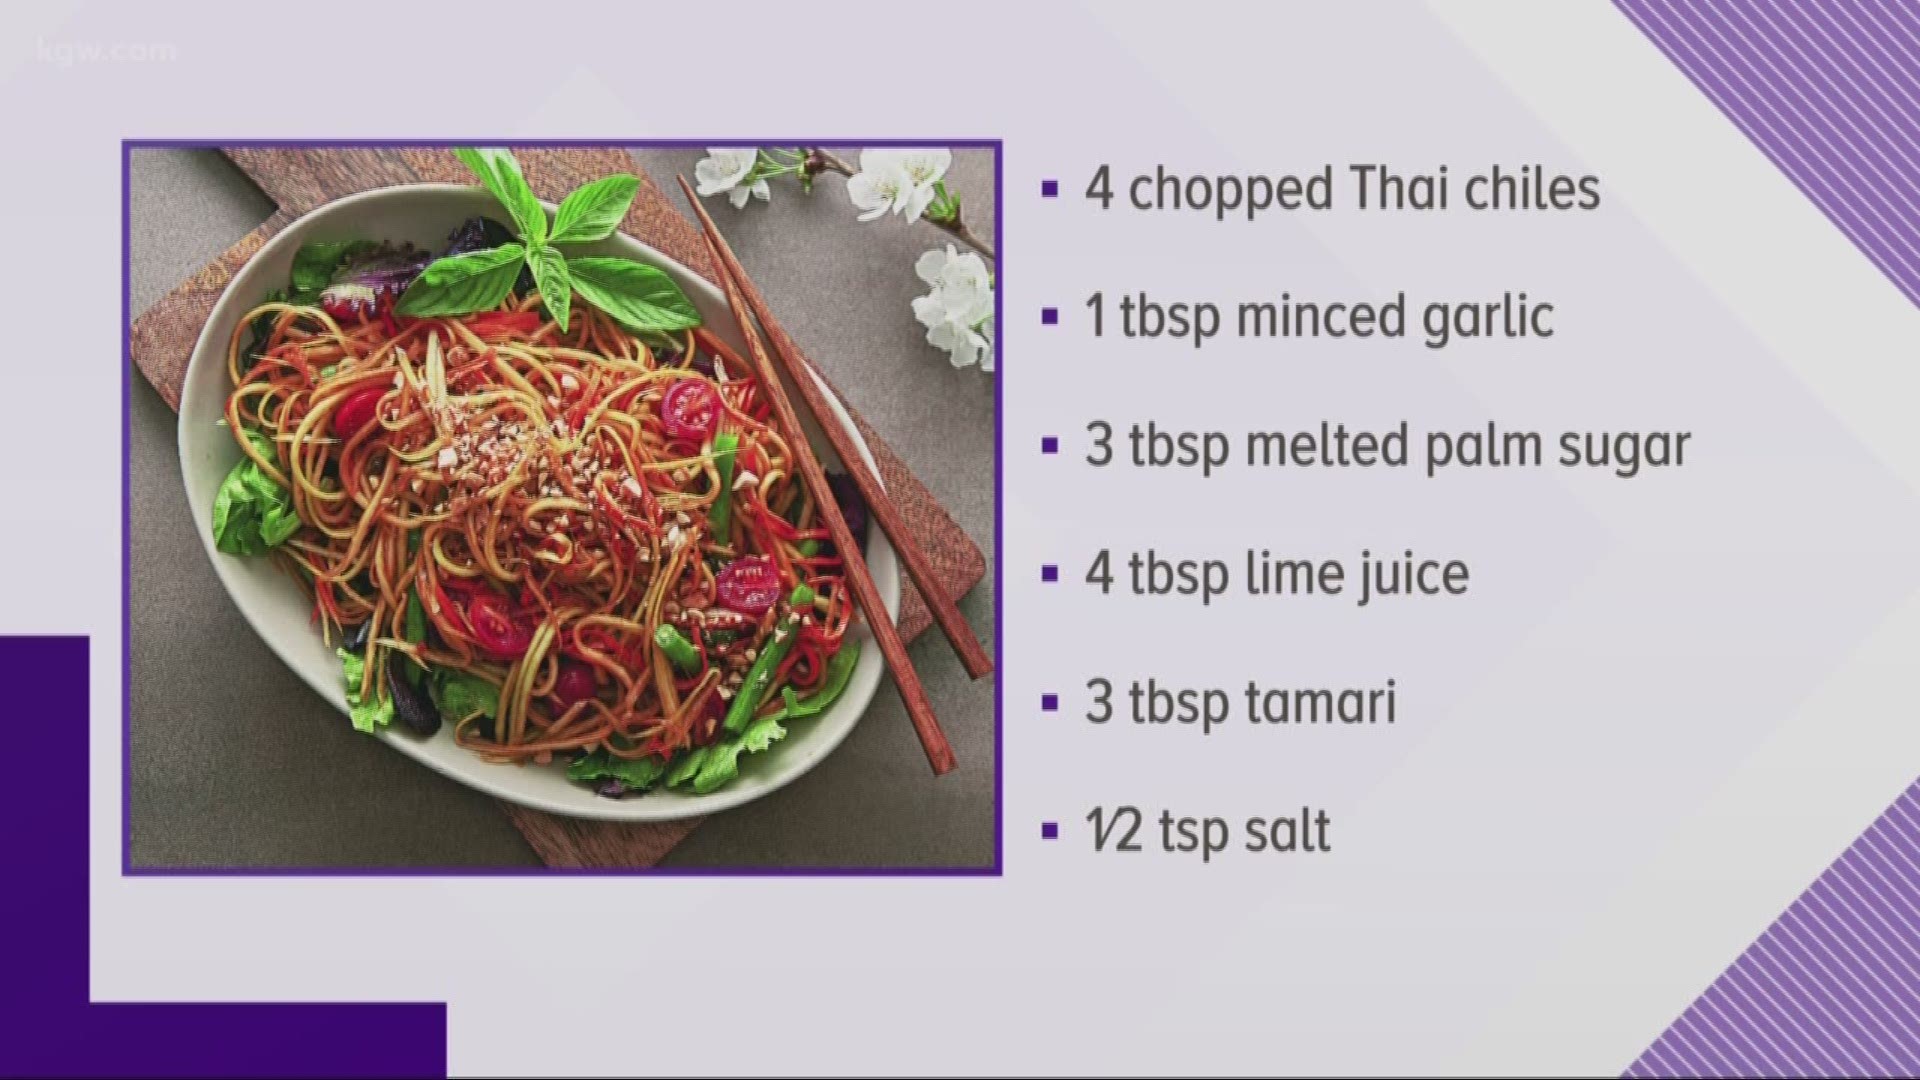 Sarah Jansala, author of “Vegan Thai Kitchen,” shows us how to make a green papaya salad.
#TonightwithCassidy
Recipe: http://bit.ly/36wBsVZ